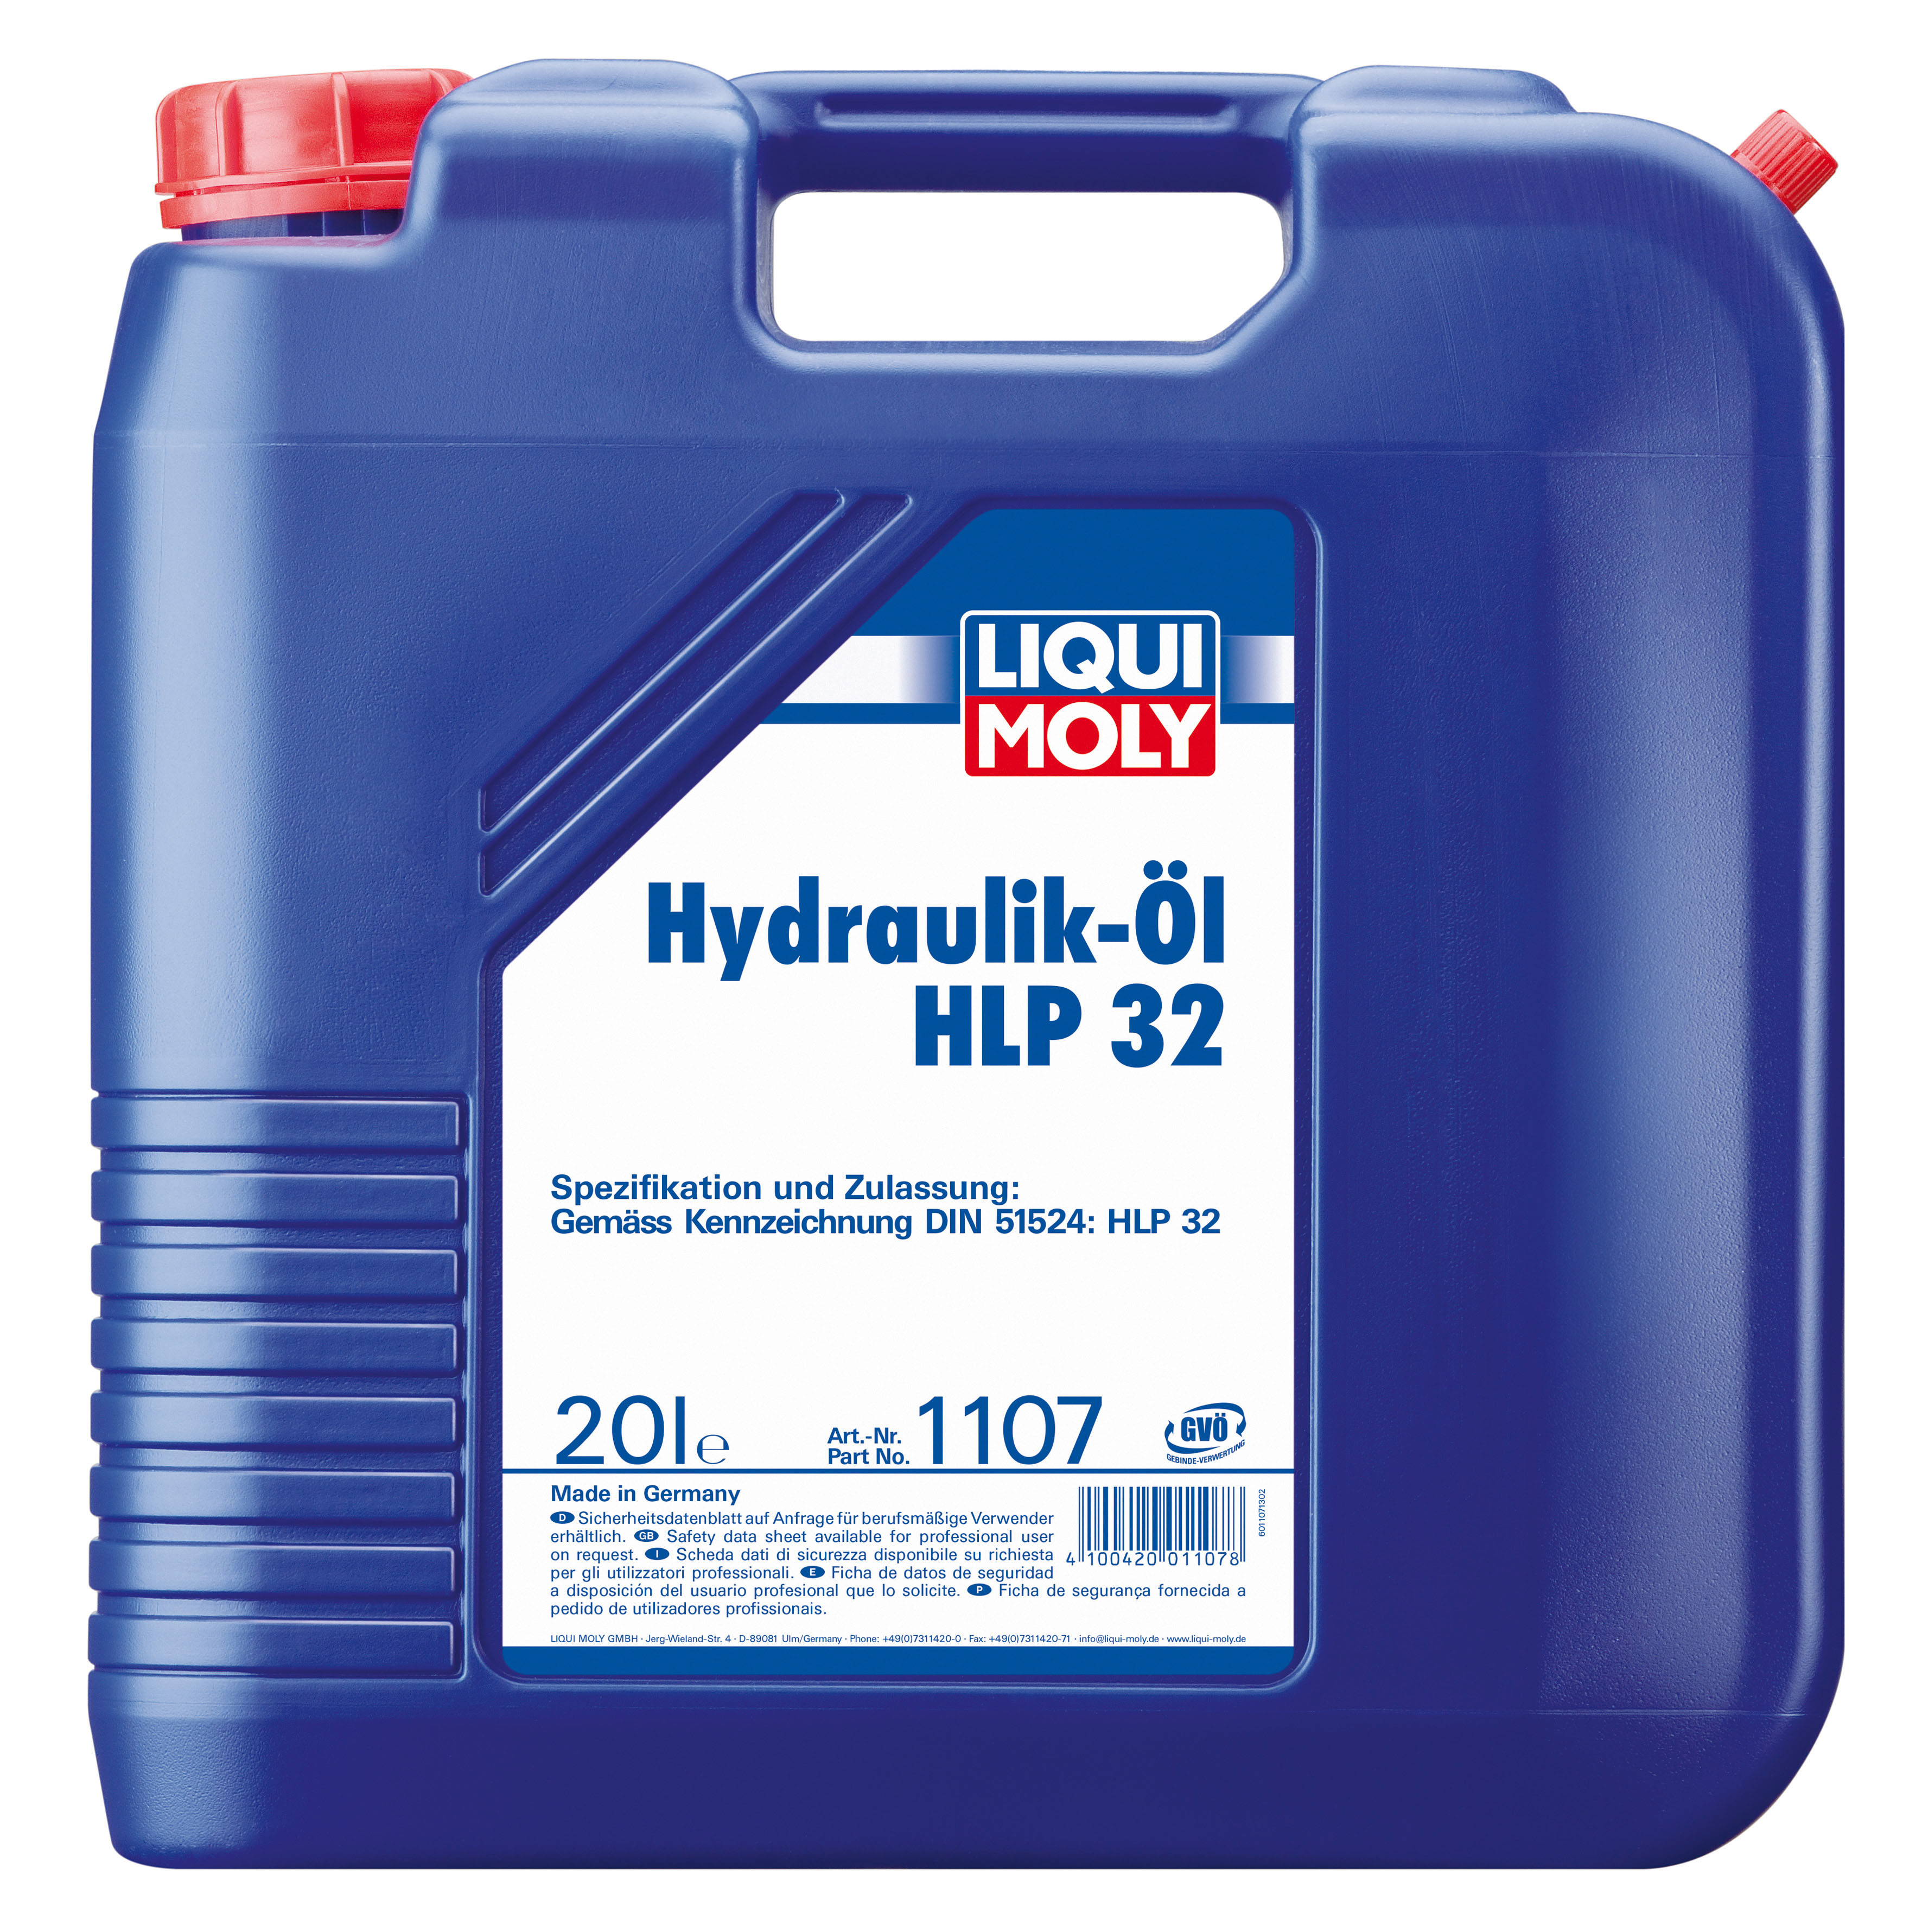 ISO VG 32 HYDRAULIKOIL HLP 20л (мин.гидравл.масло) - Liqui Moly 1107